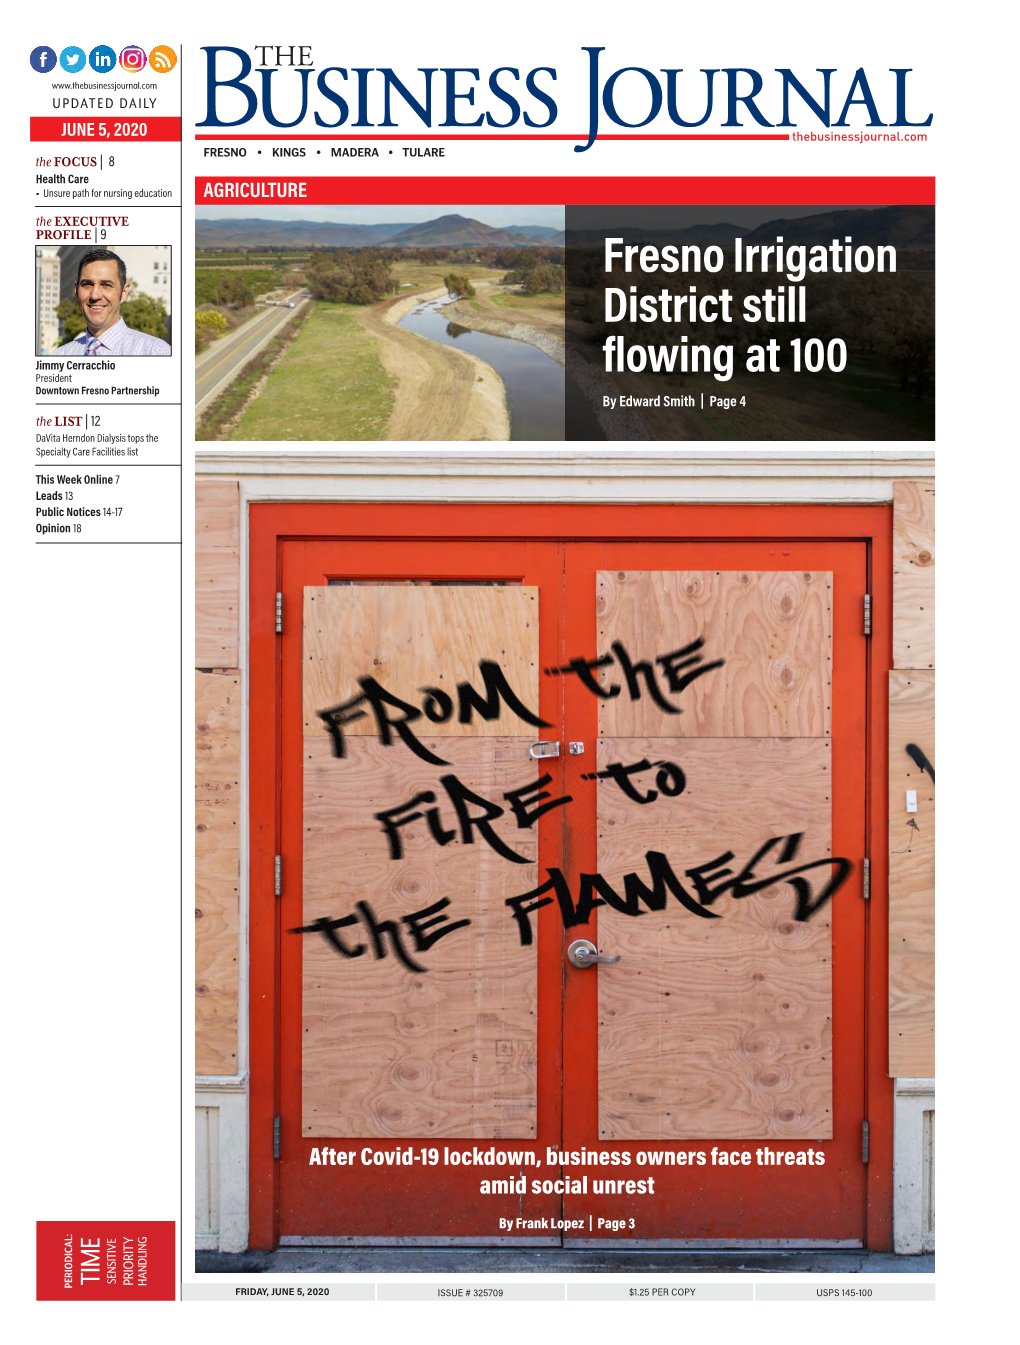 Fresno Irrigation District Still Flowing at 100